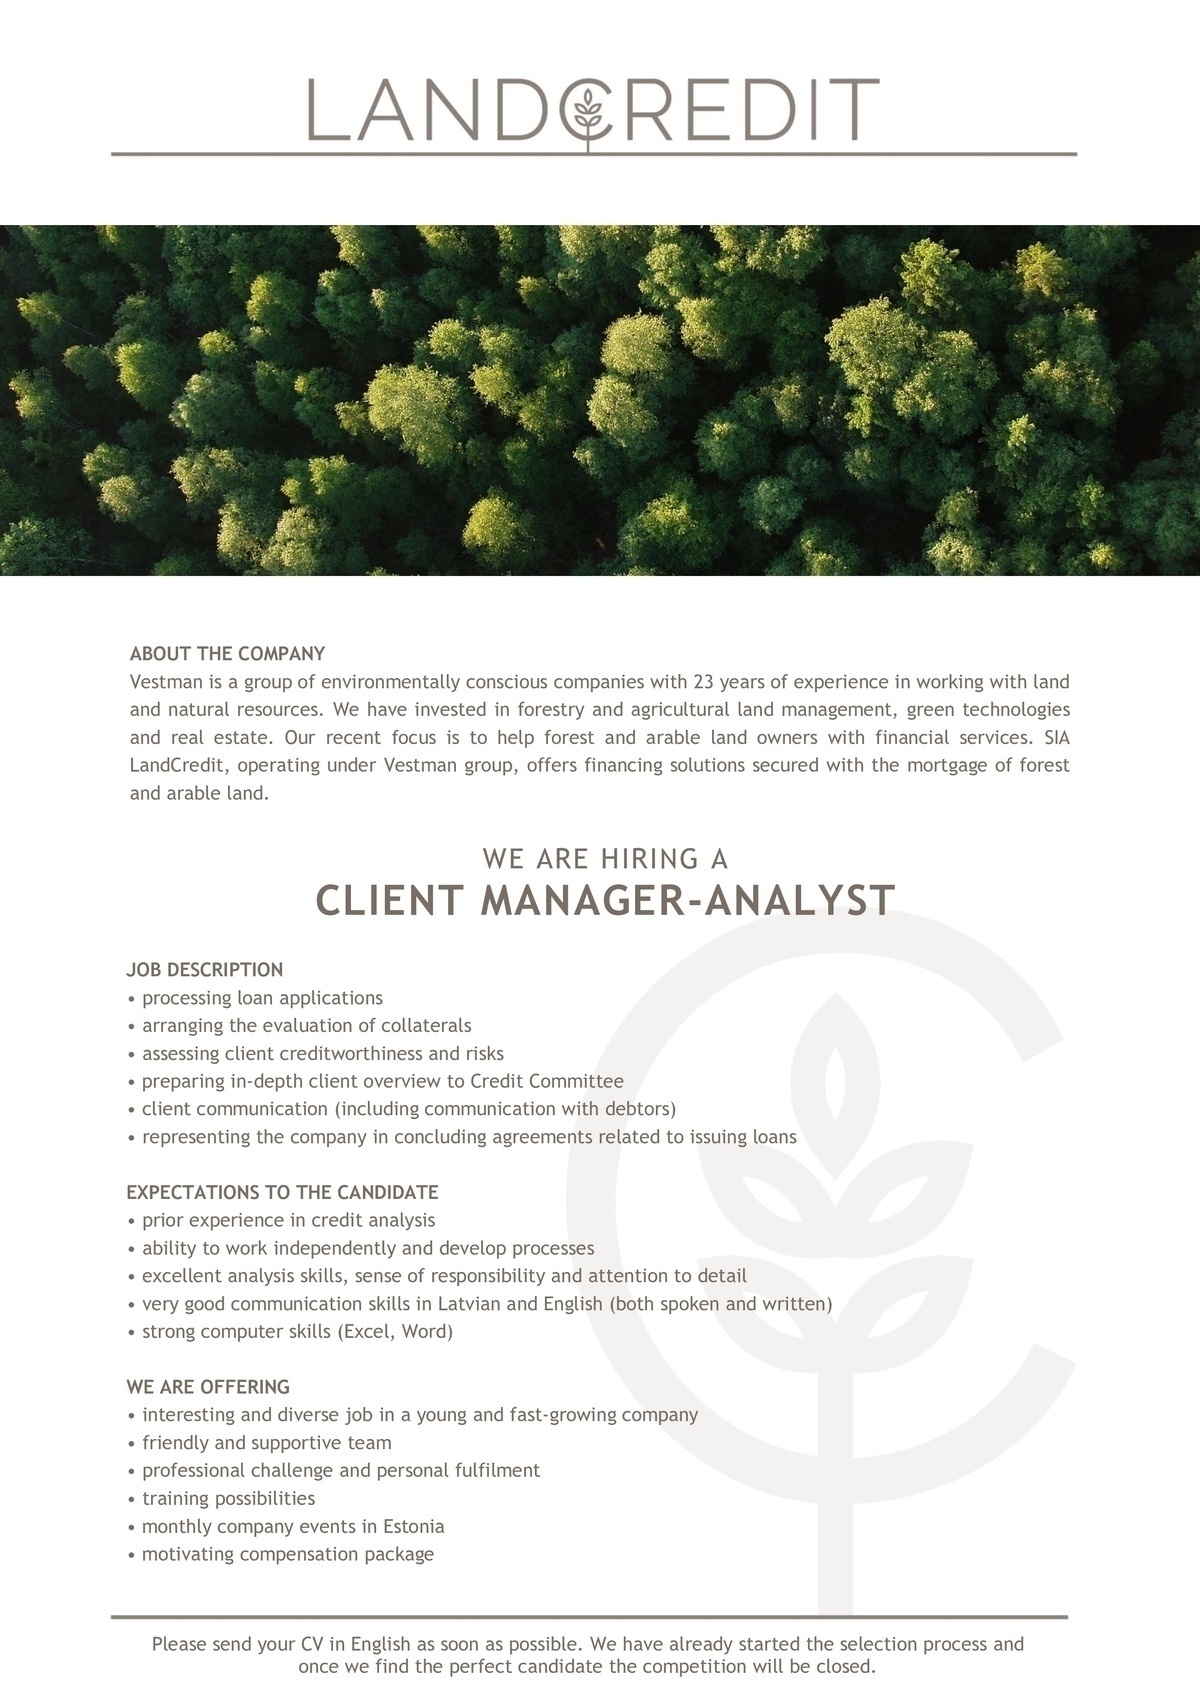 CV Market client Client Manager - Analyst